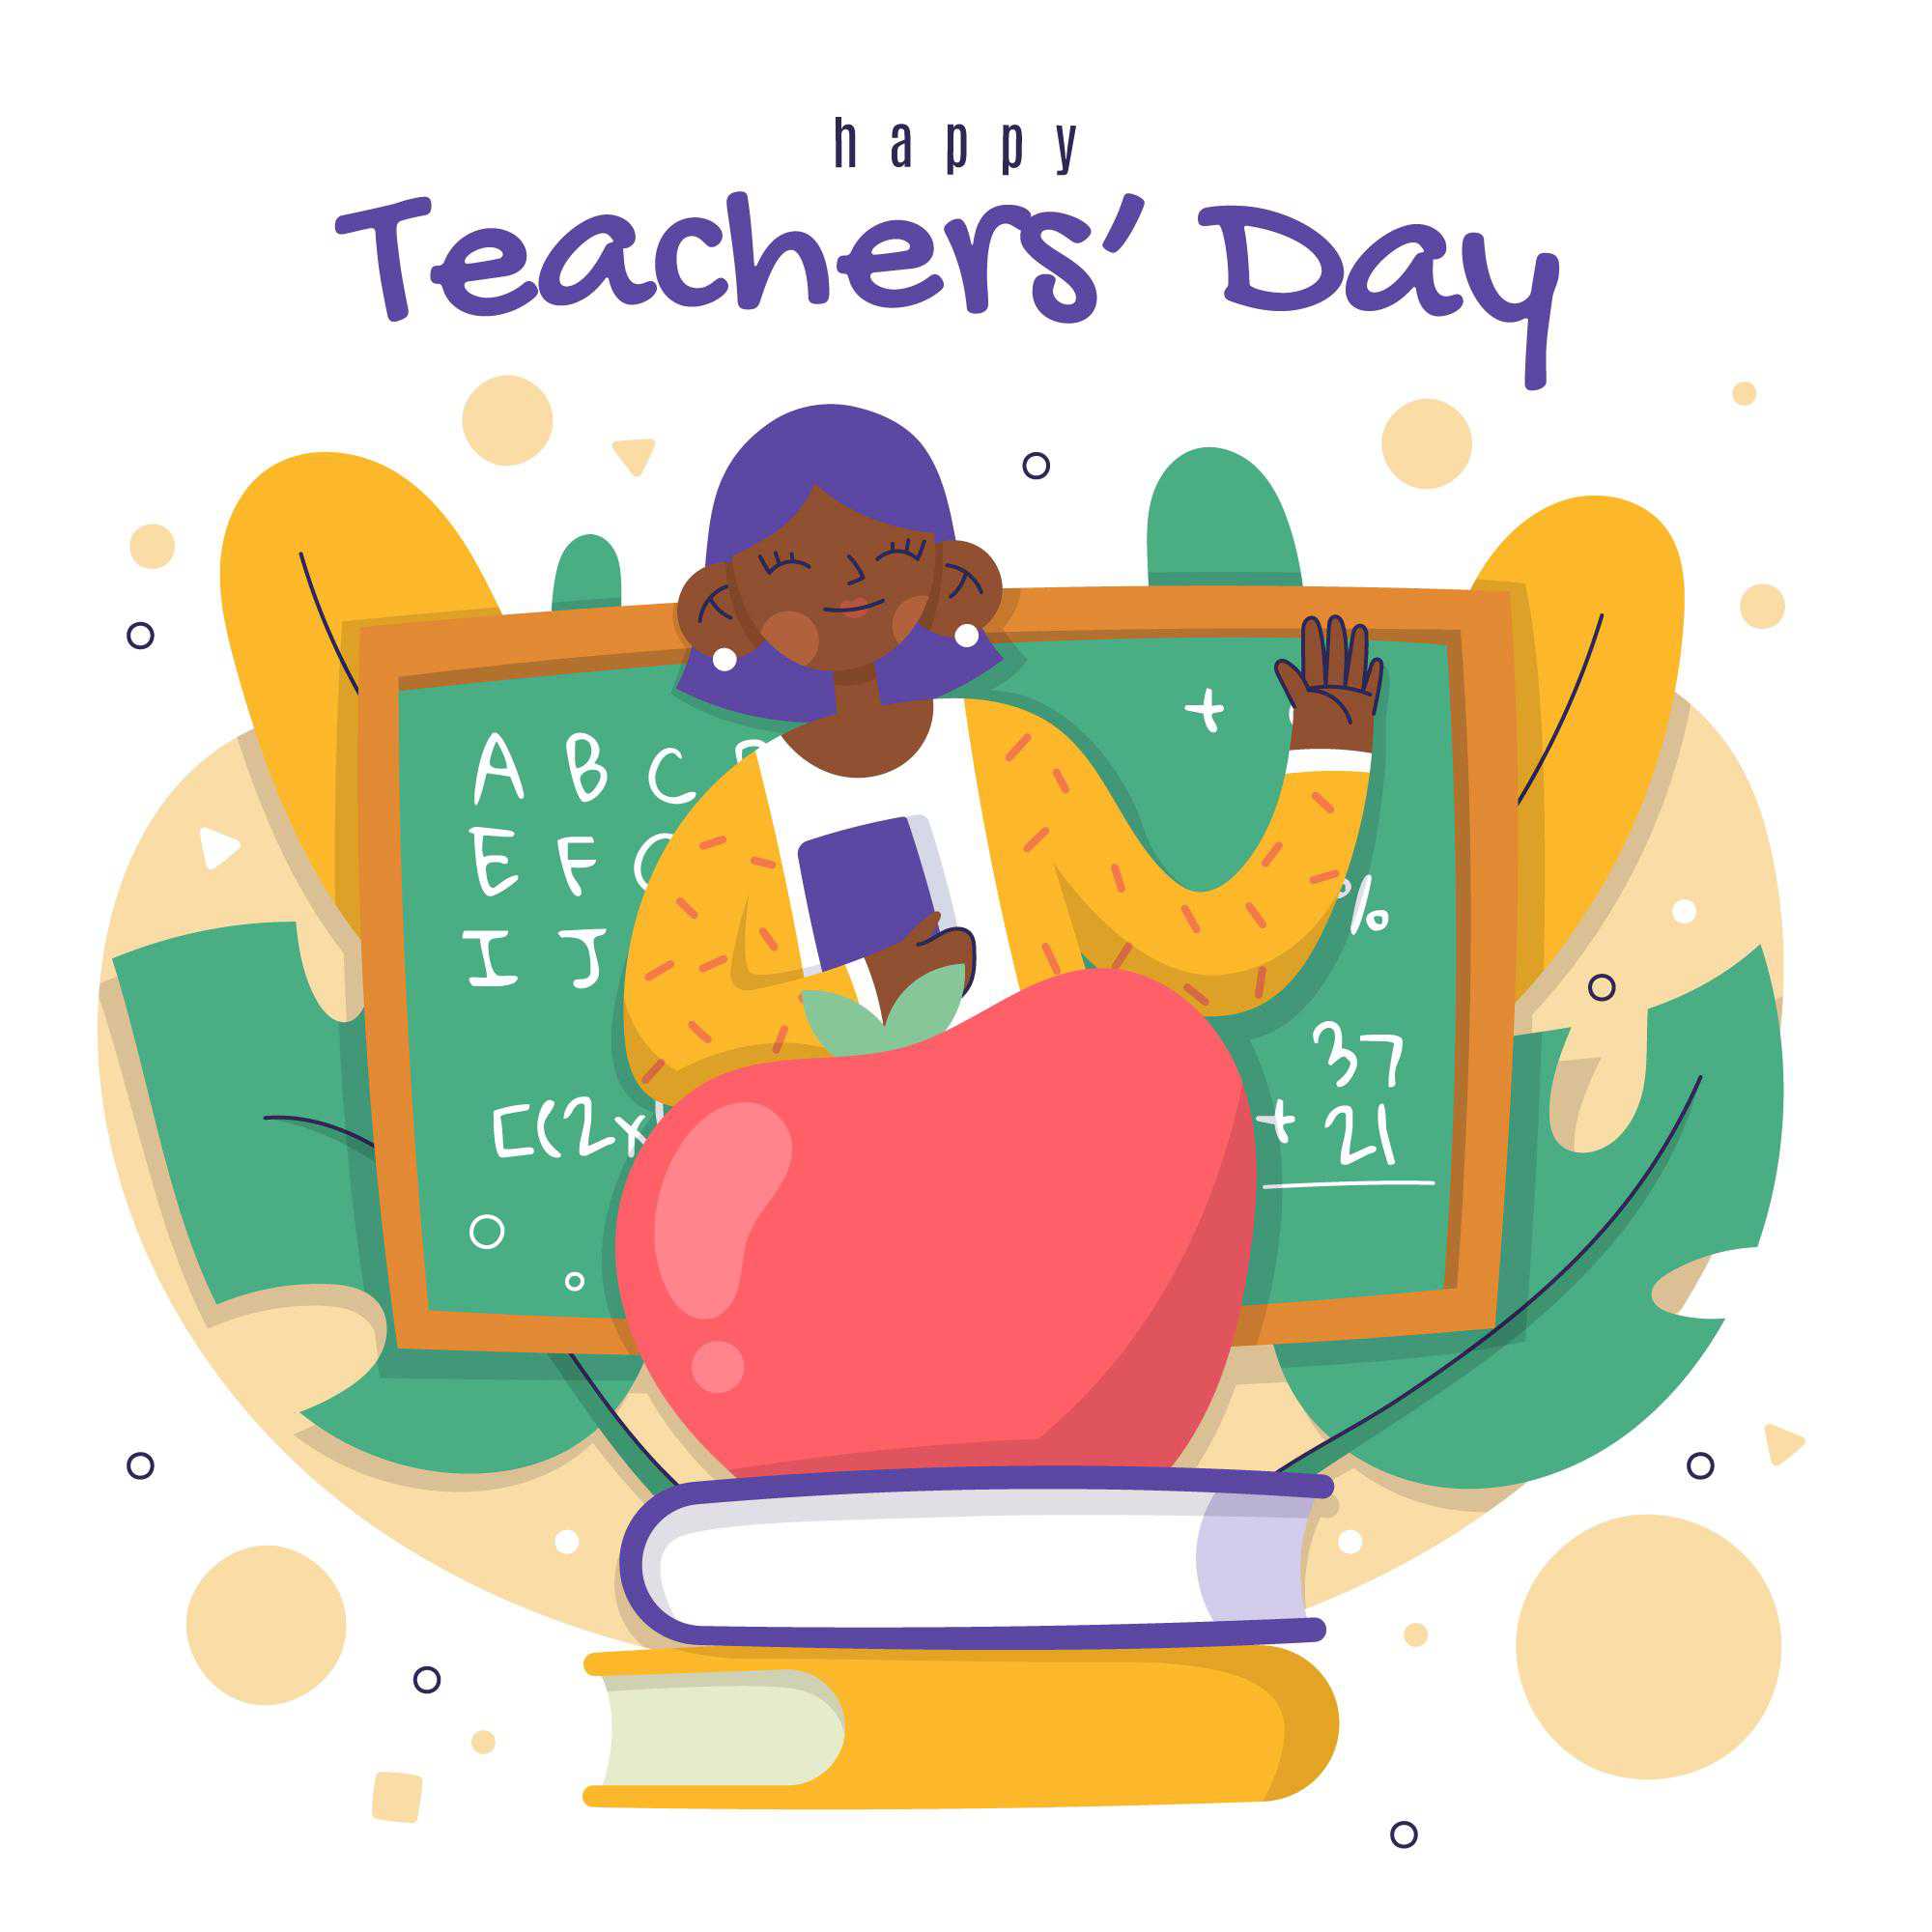 Happy Teacher's Day images